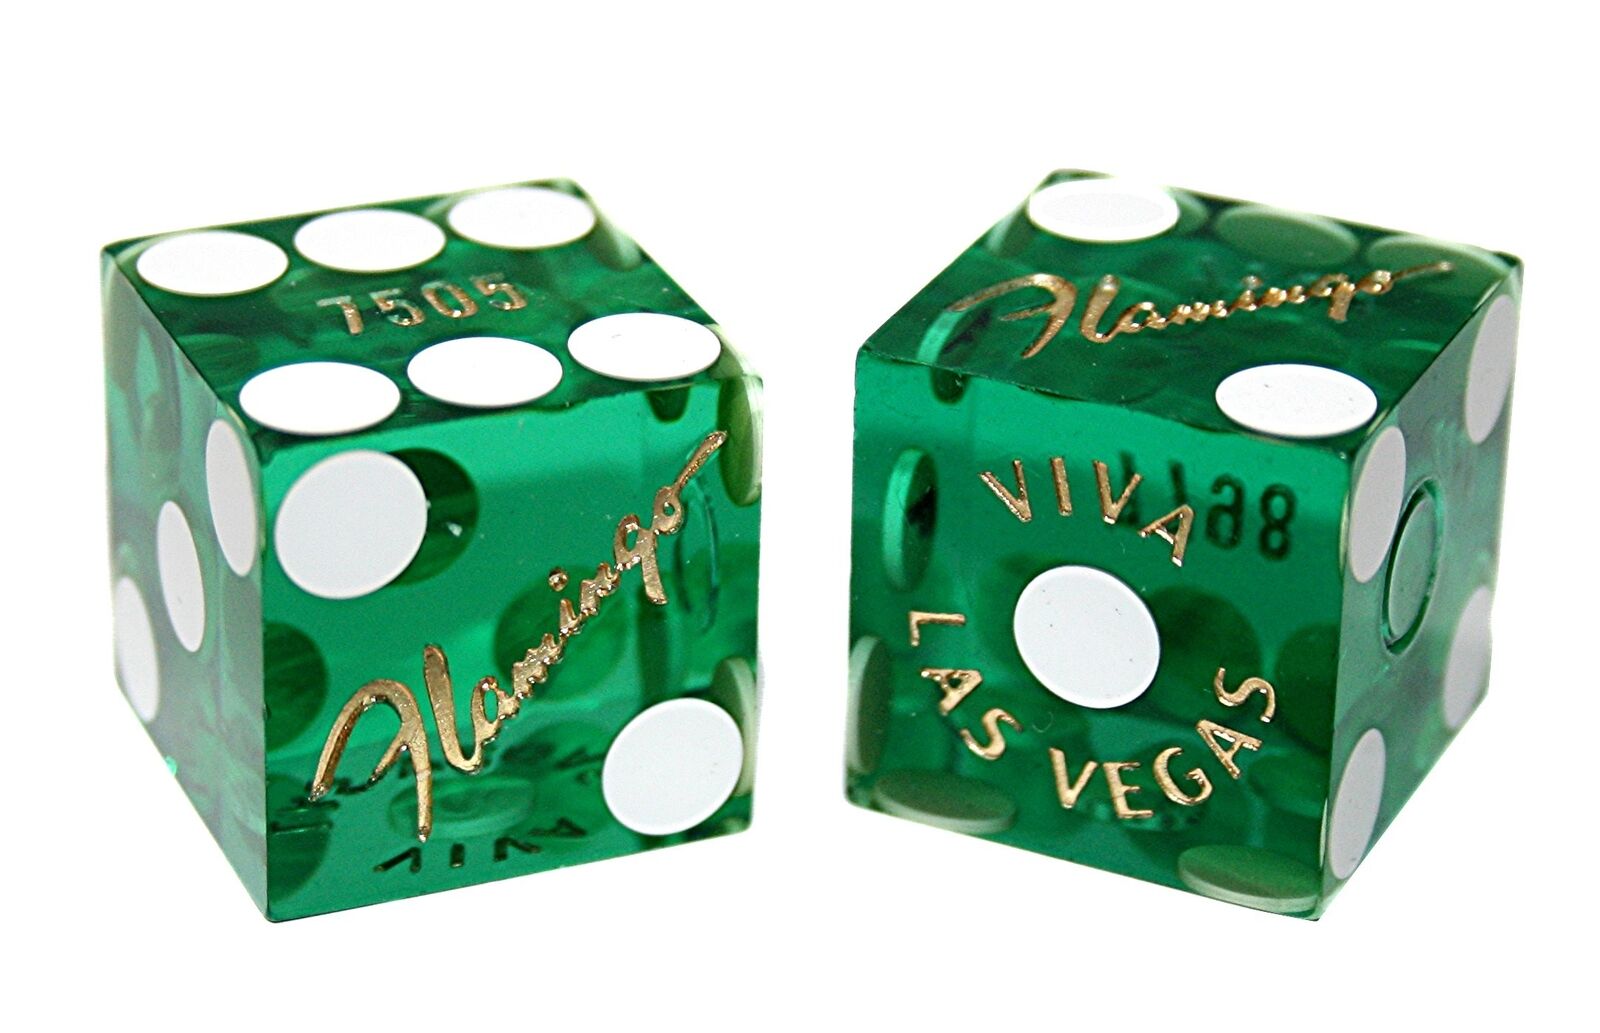 Authentic Flamingo Las Vegas Casino Craps Dice Green Polished Mixed Serial #s